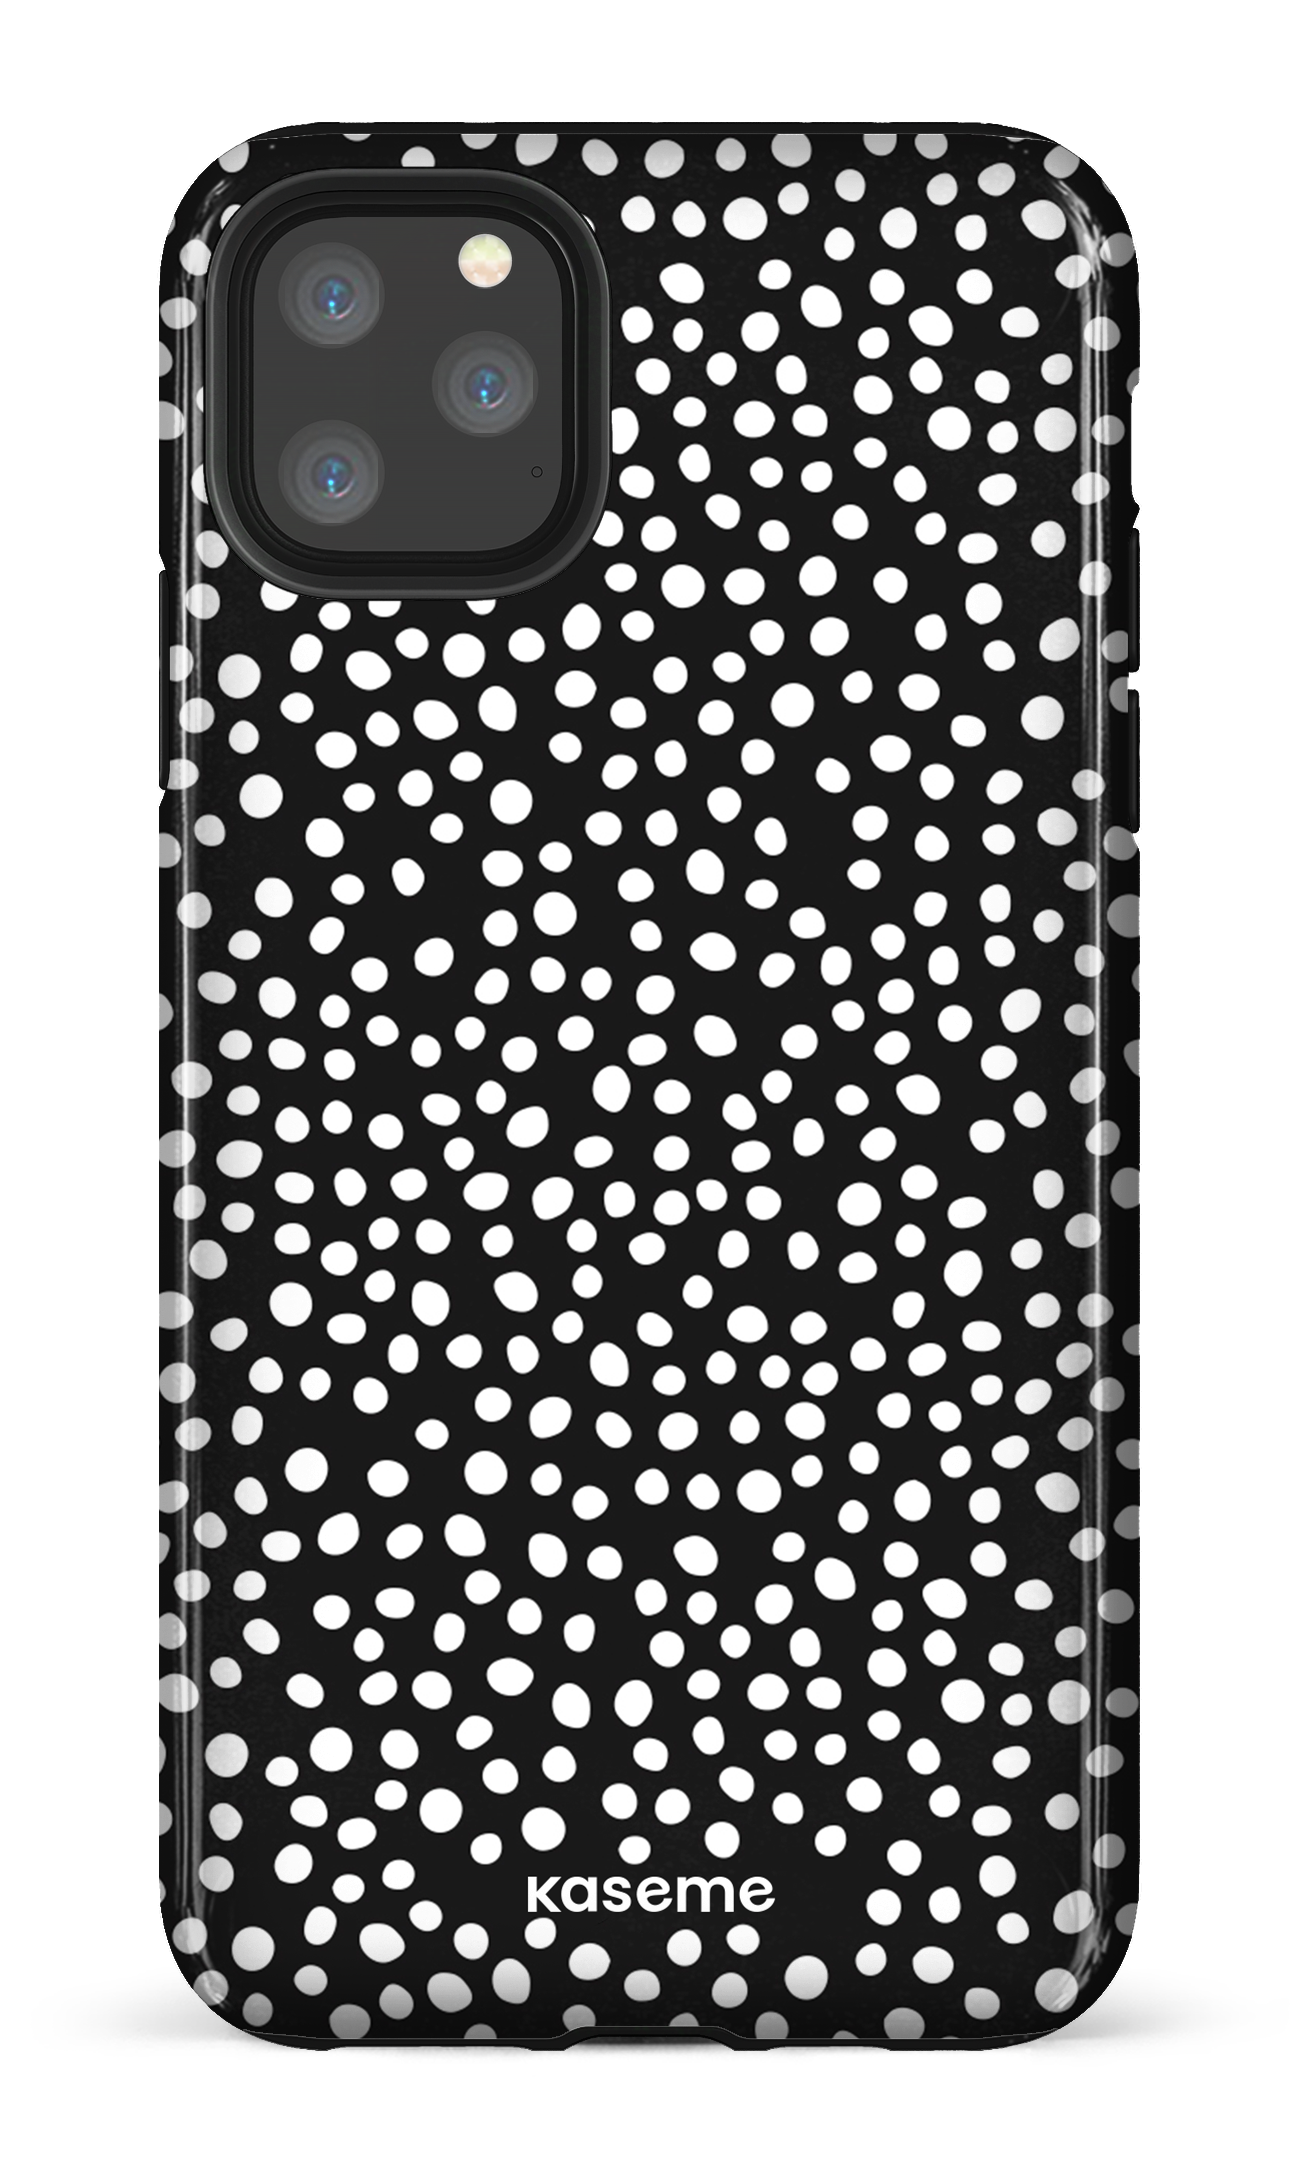 Honey black - iPhone 11 Pro Max